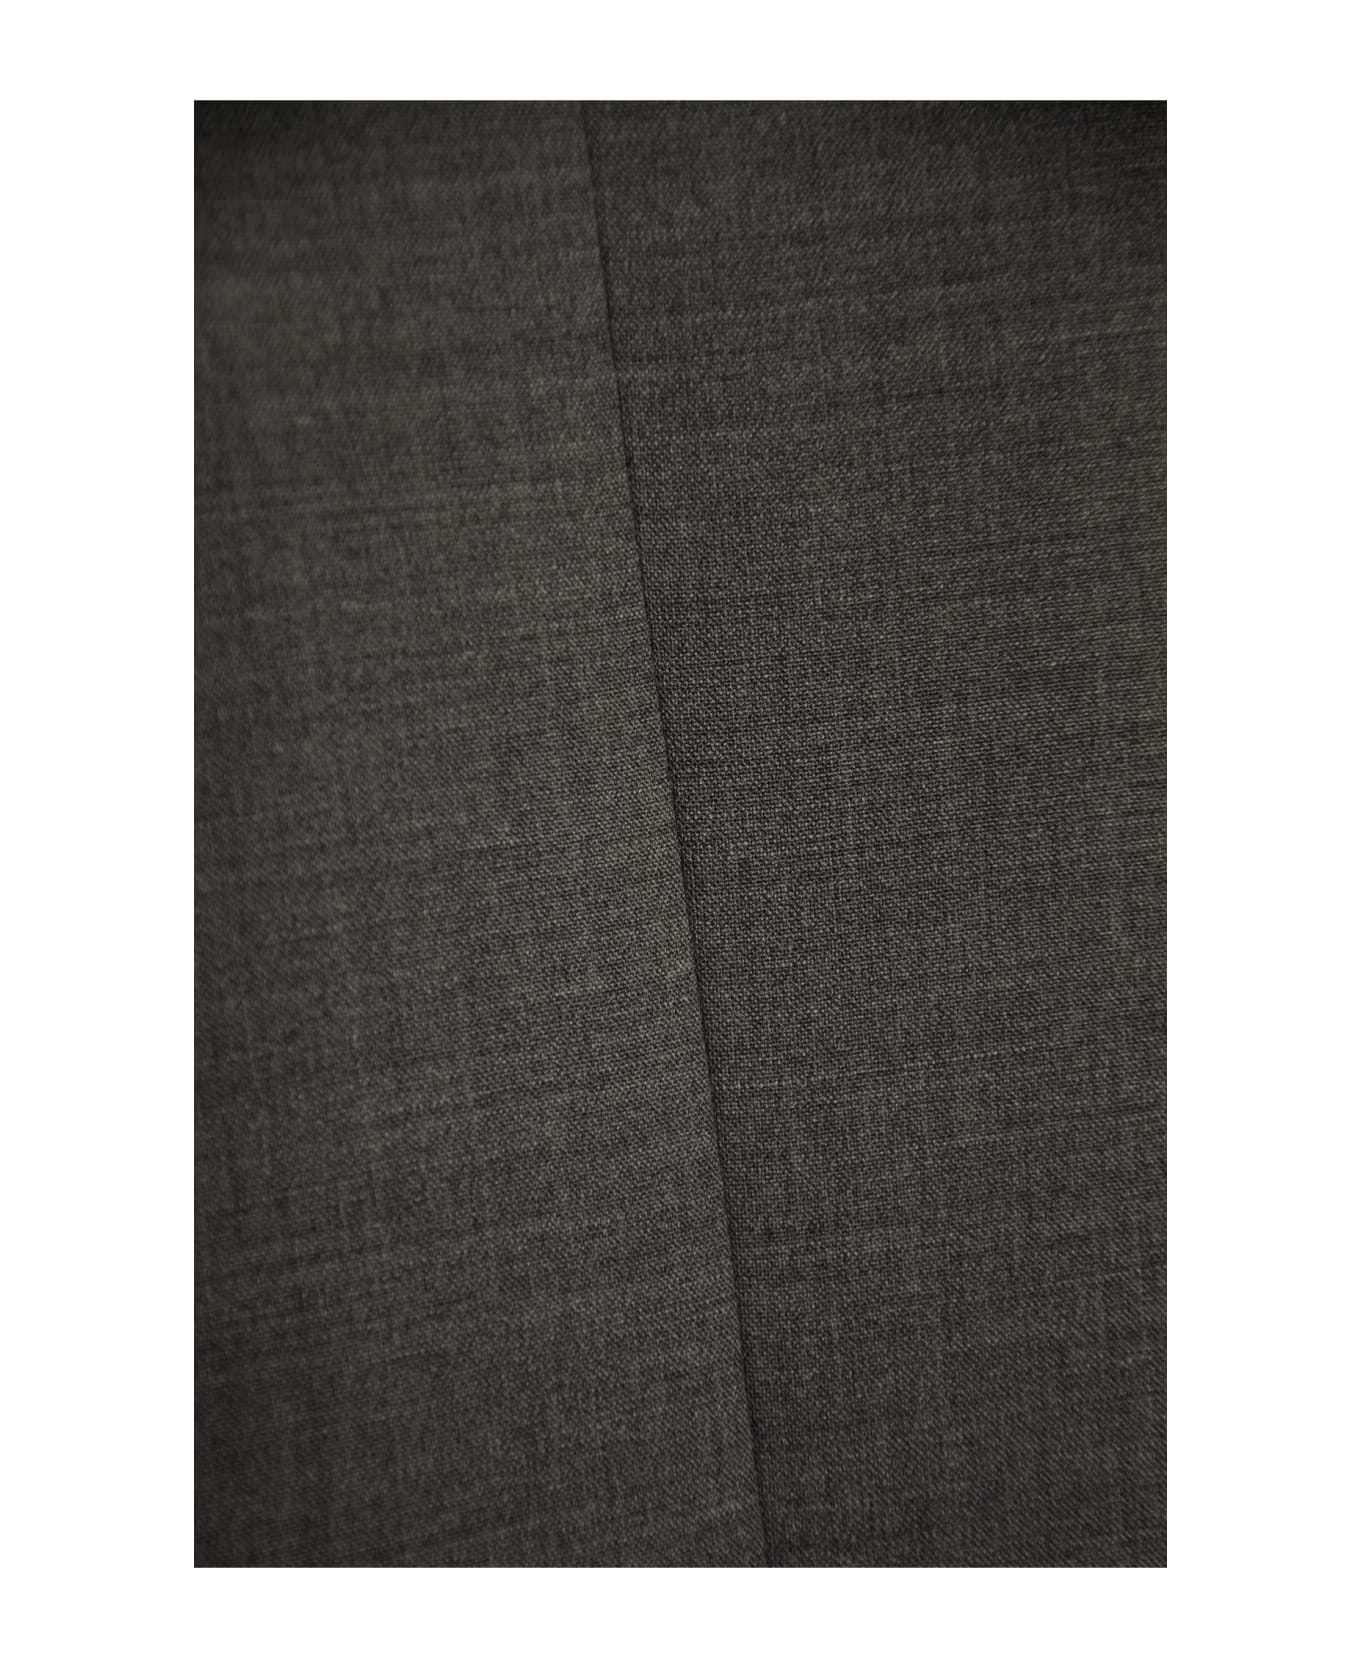 Philosophy di Lorenzo Serafini Single Buttoned Regular Blazer - Grey